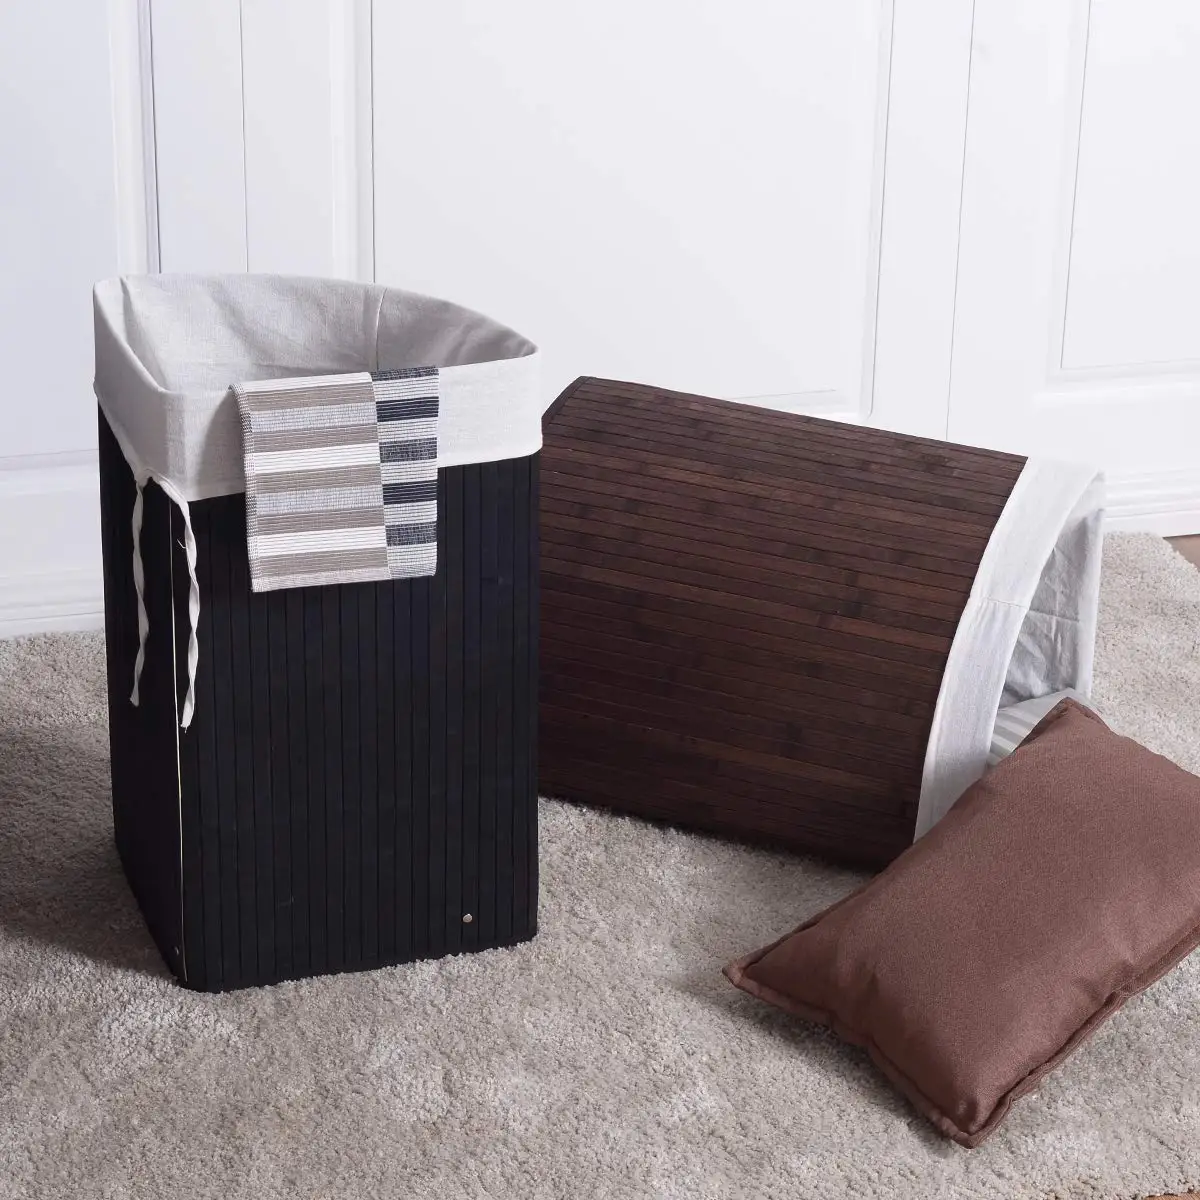 Practical corner shape coffee bamboo foldable laundry basket